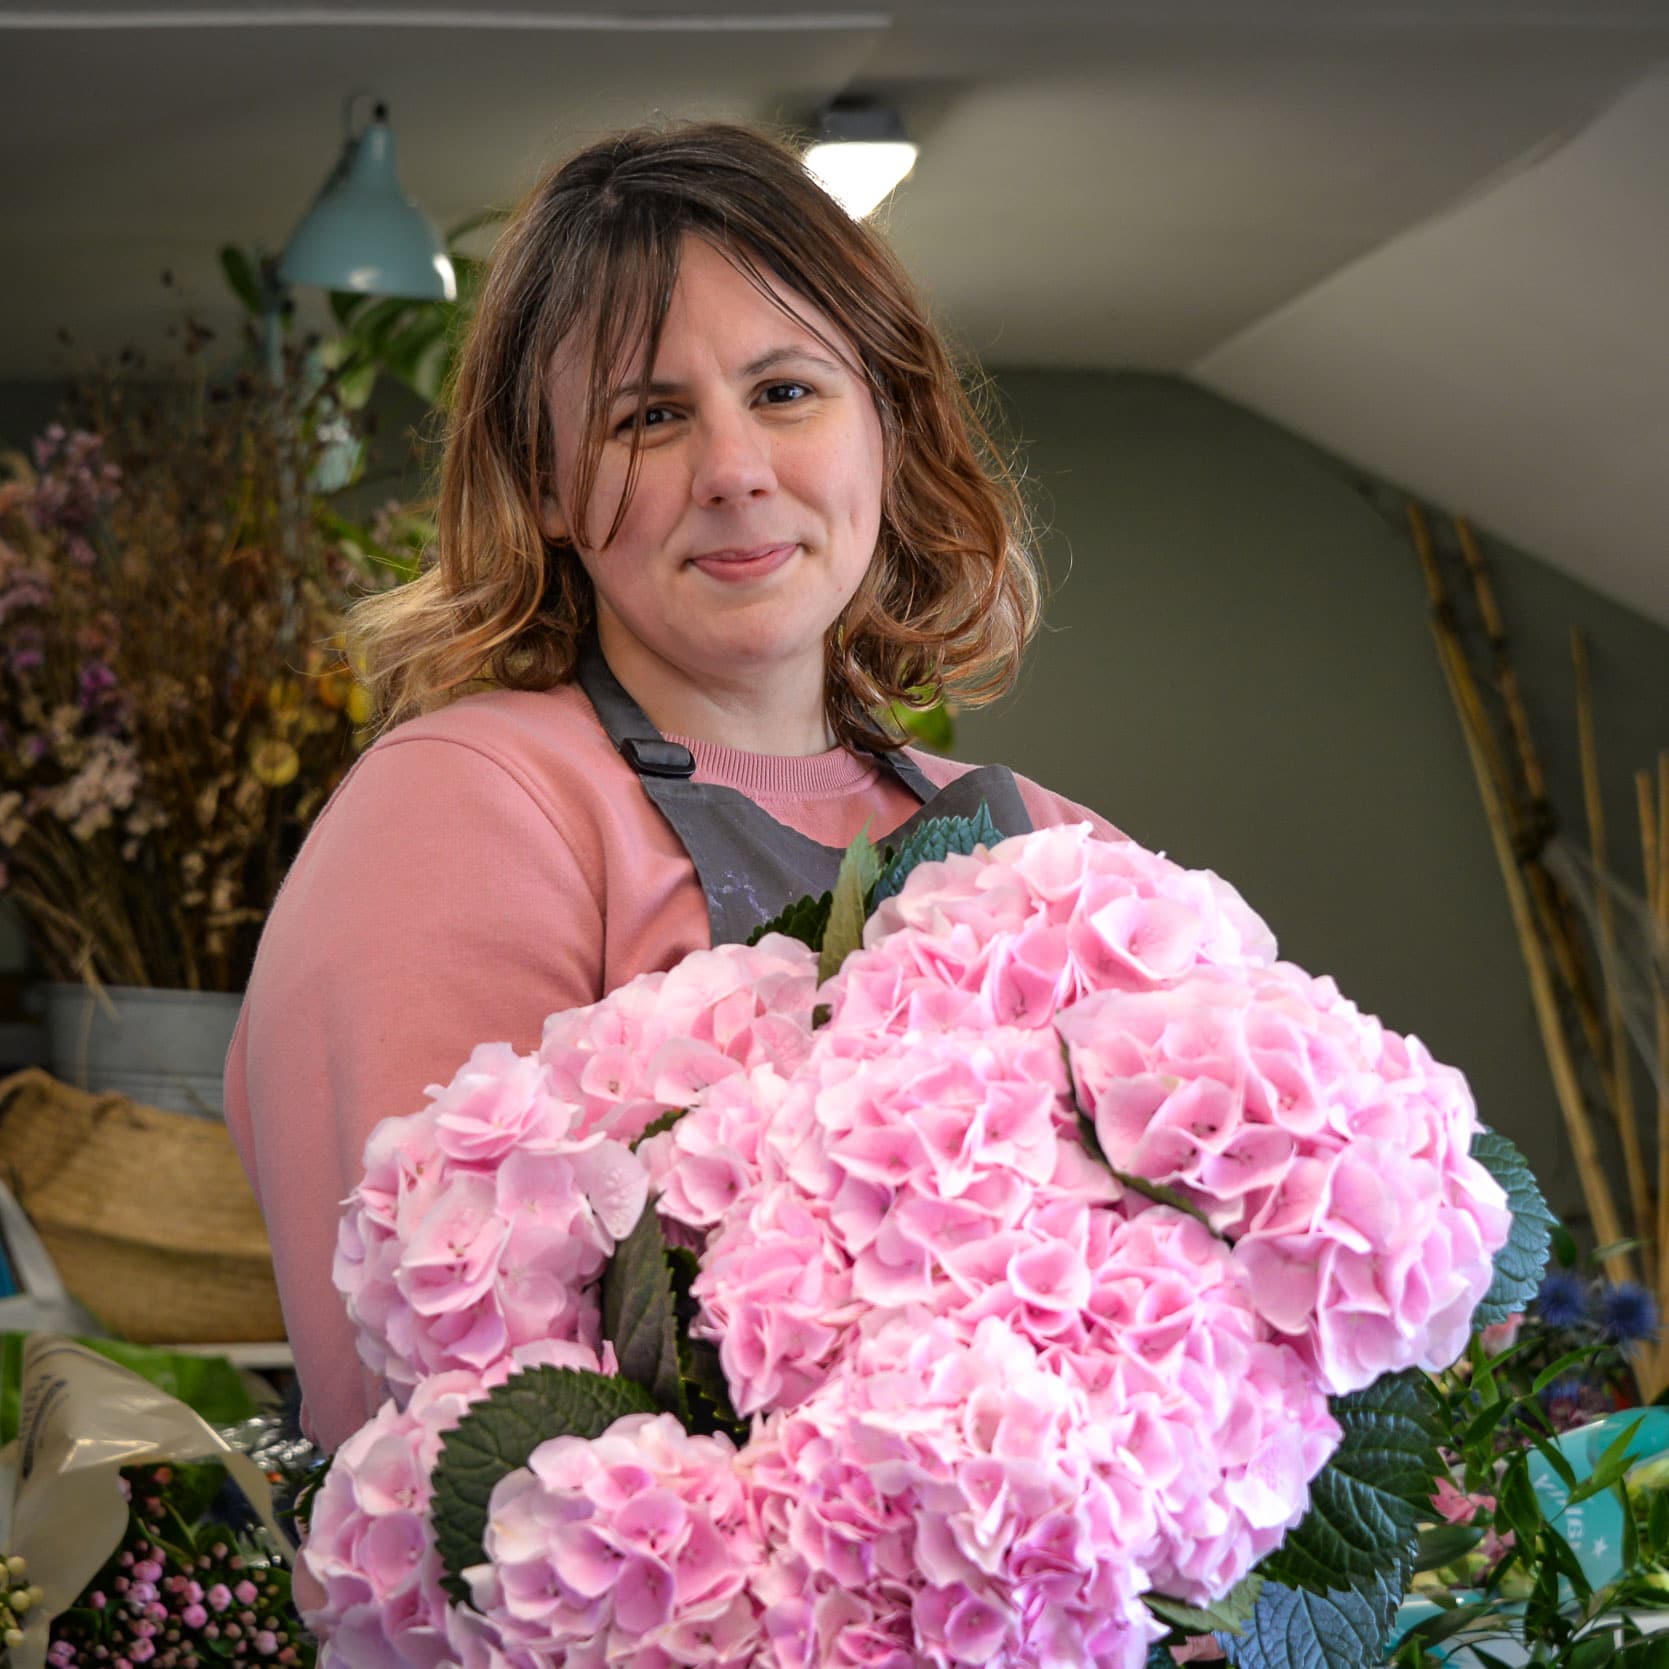 Emma the florist at Green Parlour